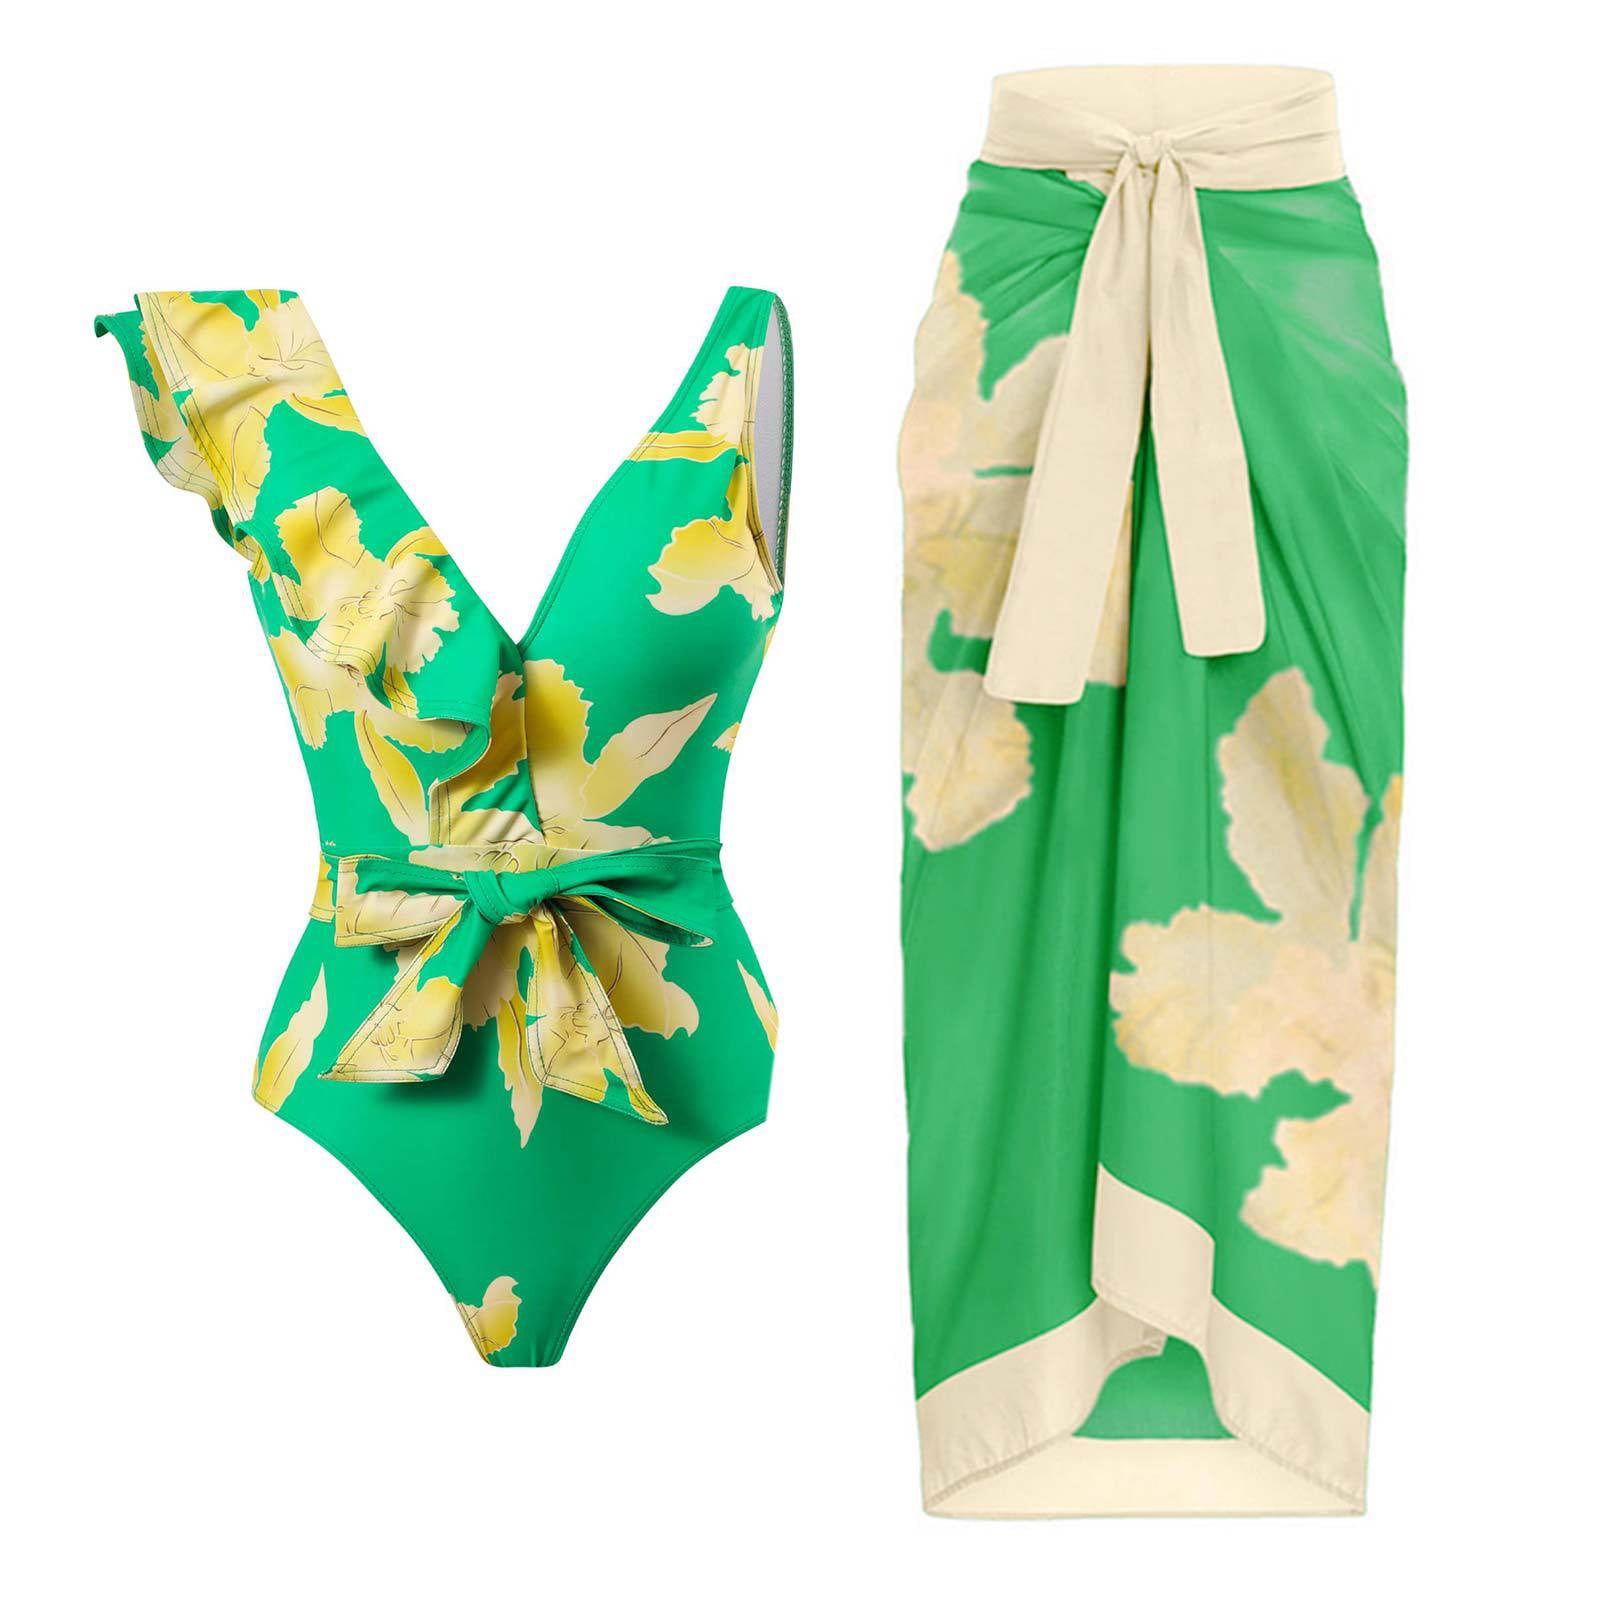 Dad Jokes You Mean Rad Jokes Women's Short Sarongs Beach Wrap Skirt Chiffon  Swimsuit Cover Up Bikini Pareo 